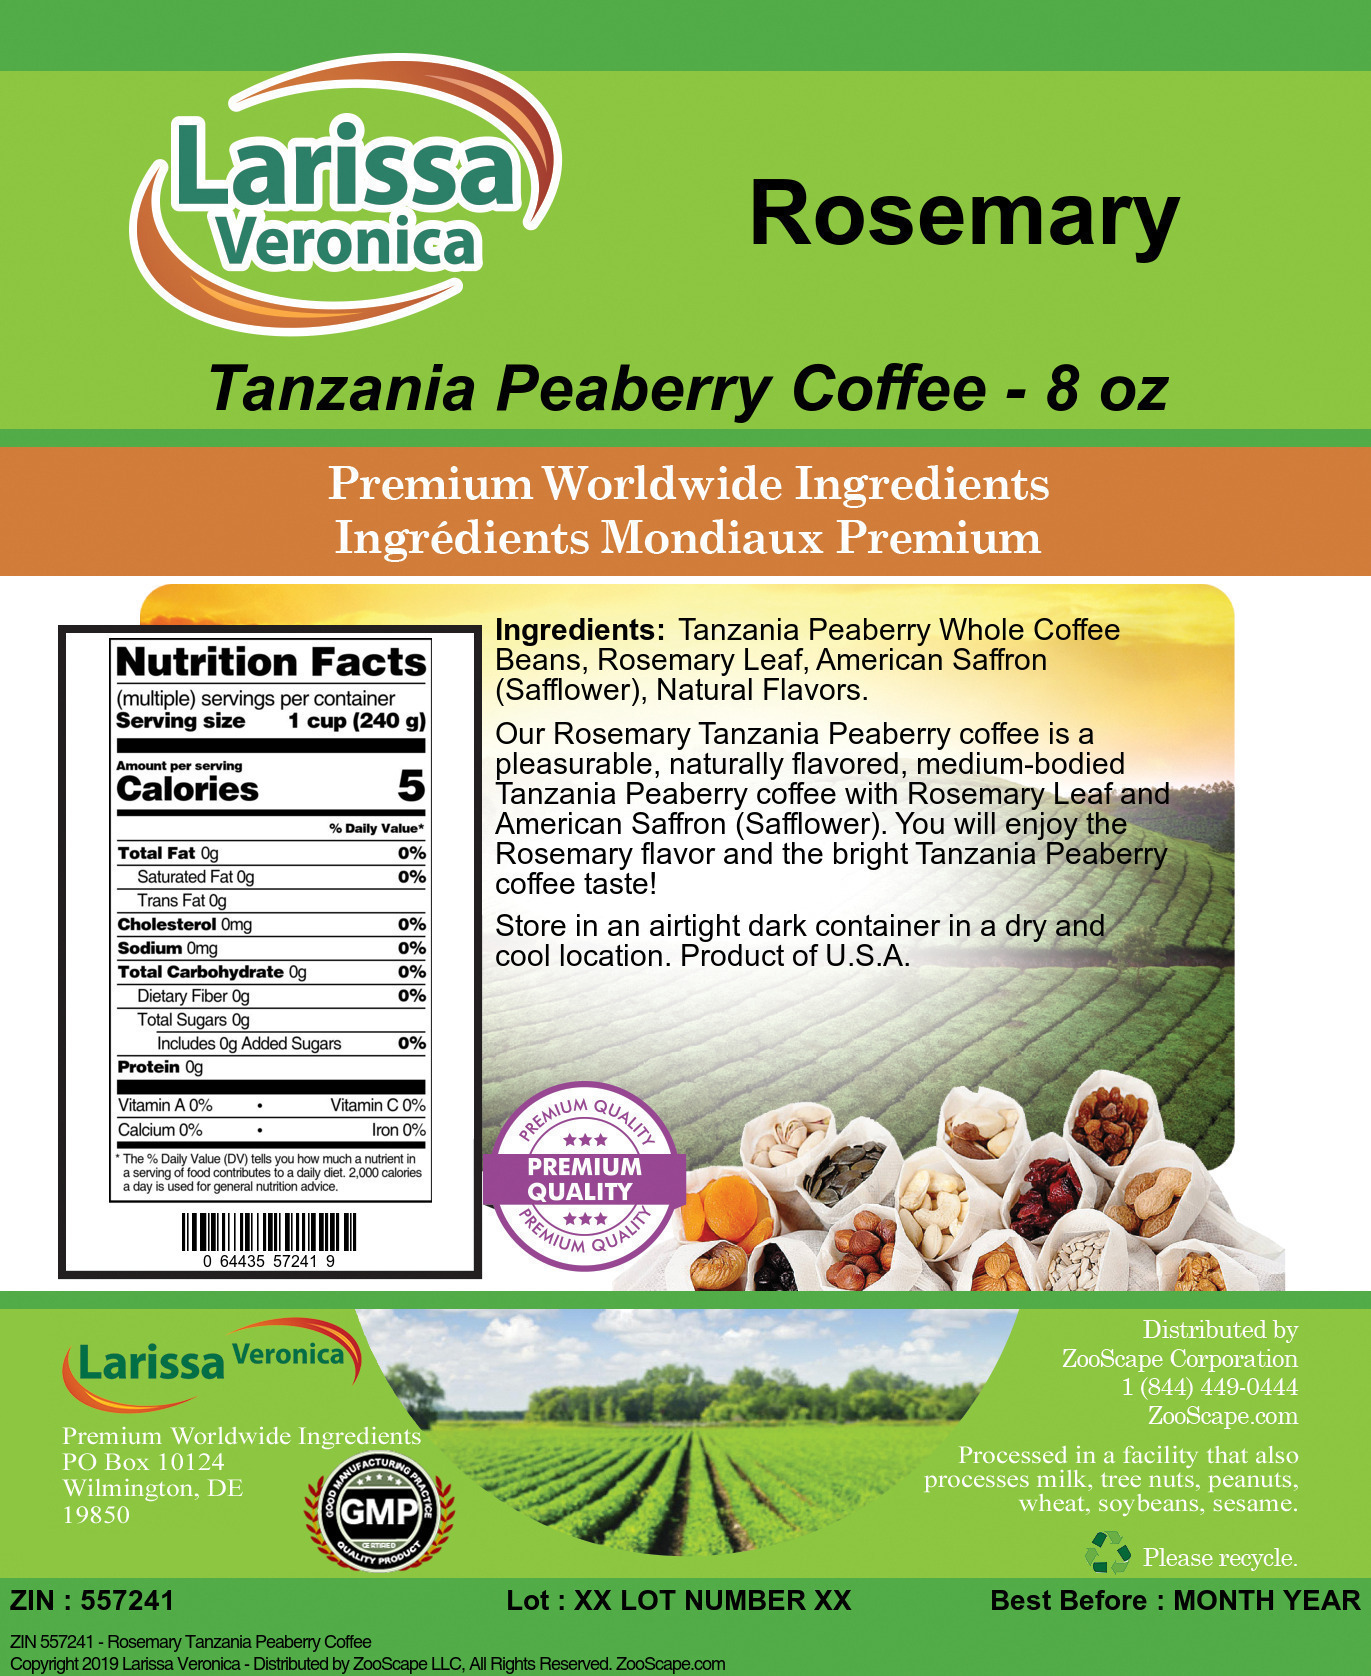 Rosemary Tanzania Peaberry Coffee - Label